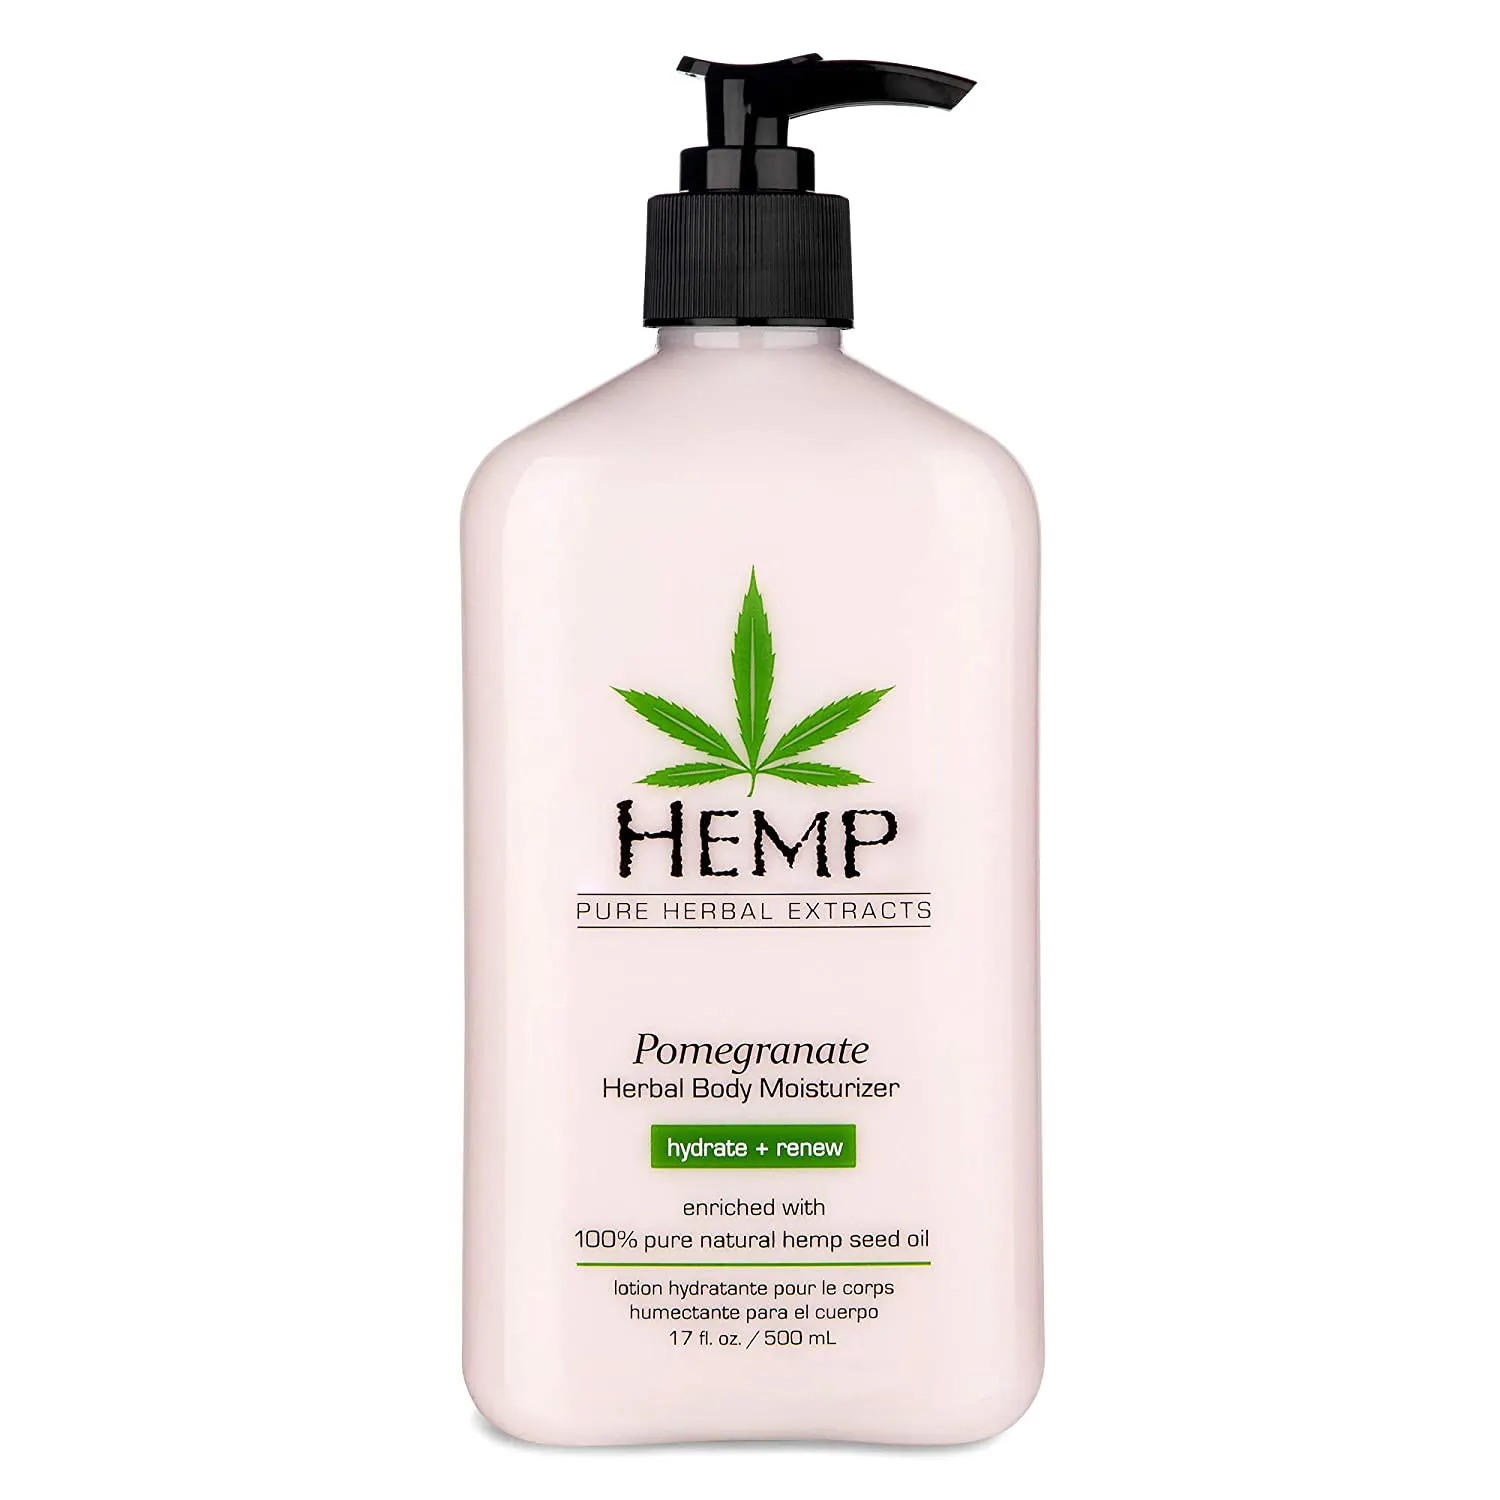 Hemp Pomegranate Herbal Body Moisturizer Natural Paraben-Free Lotion And Moisturizing Cream For All Skin